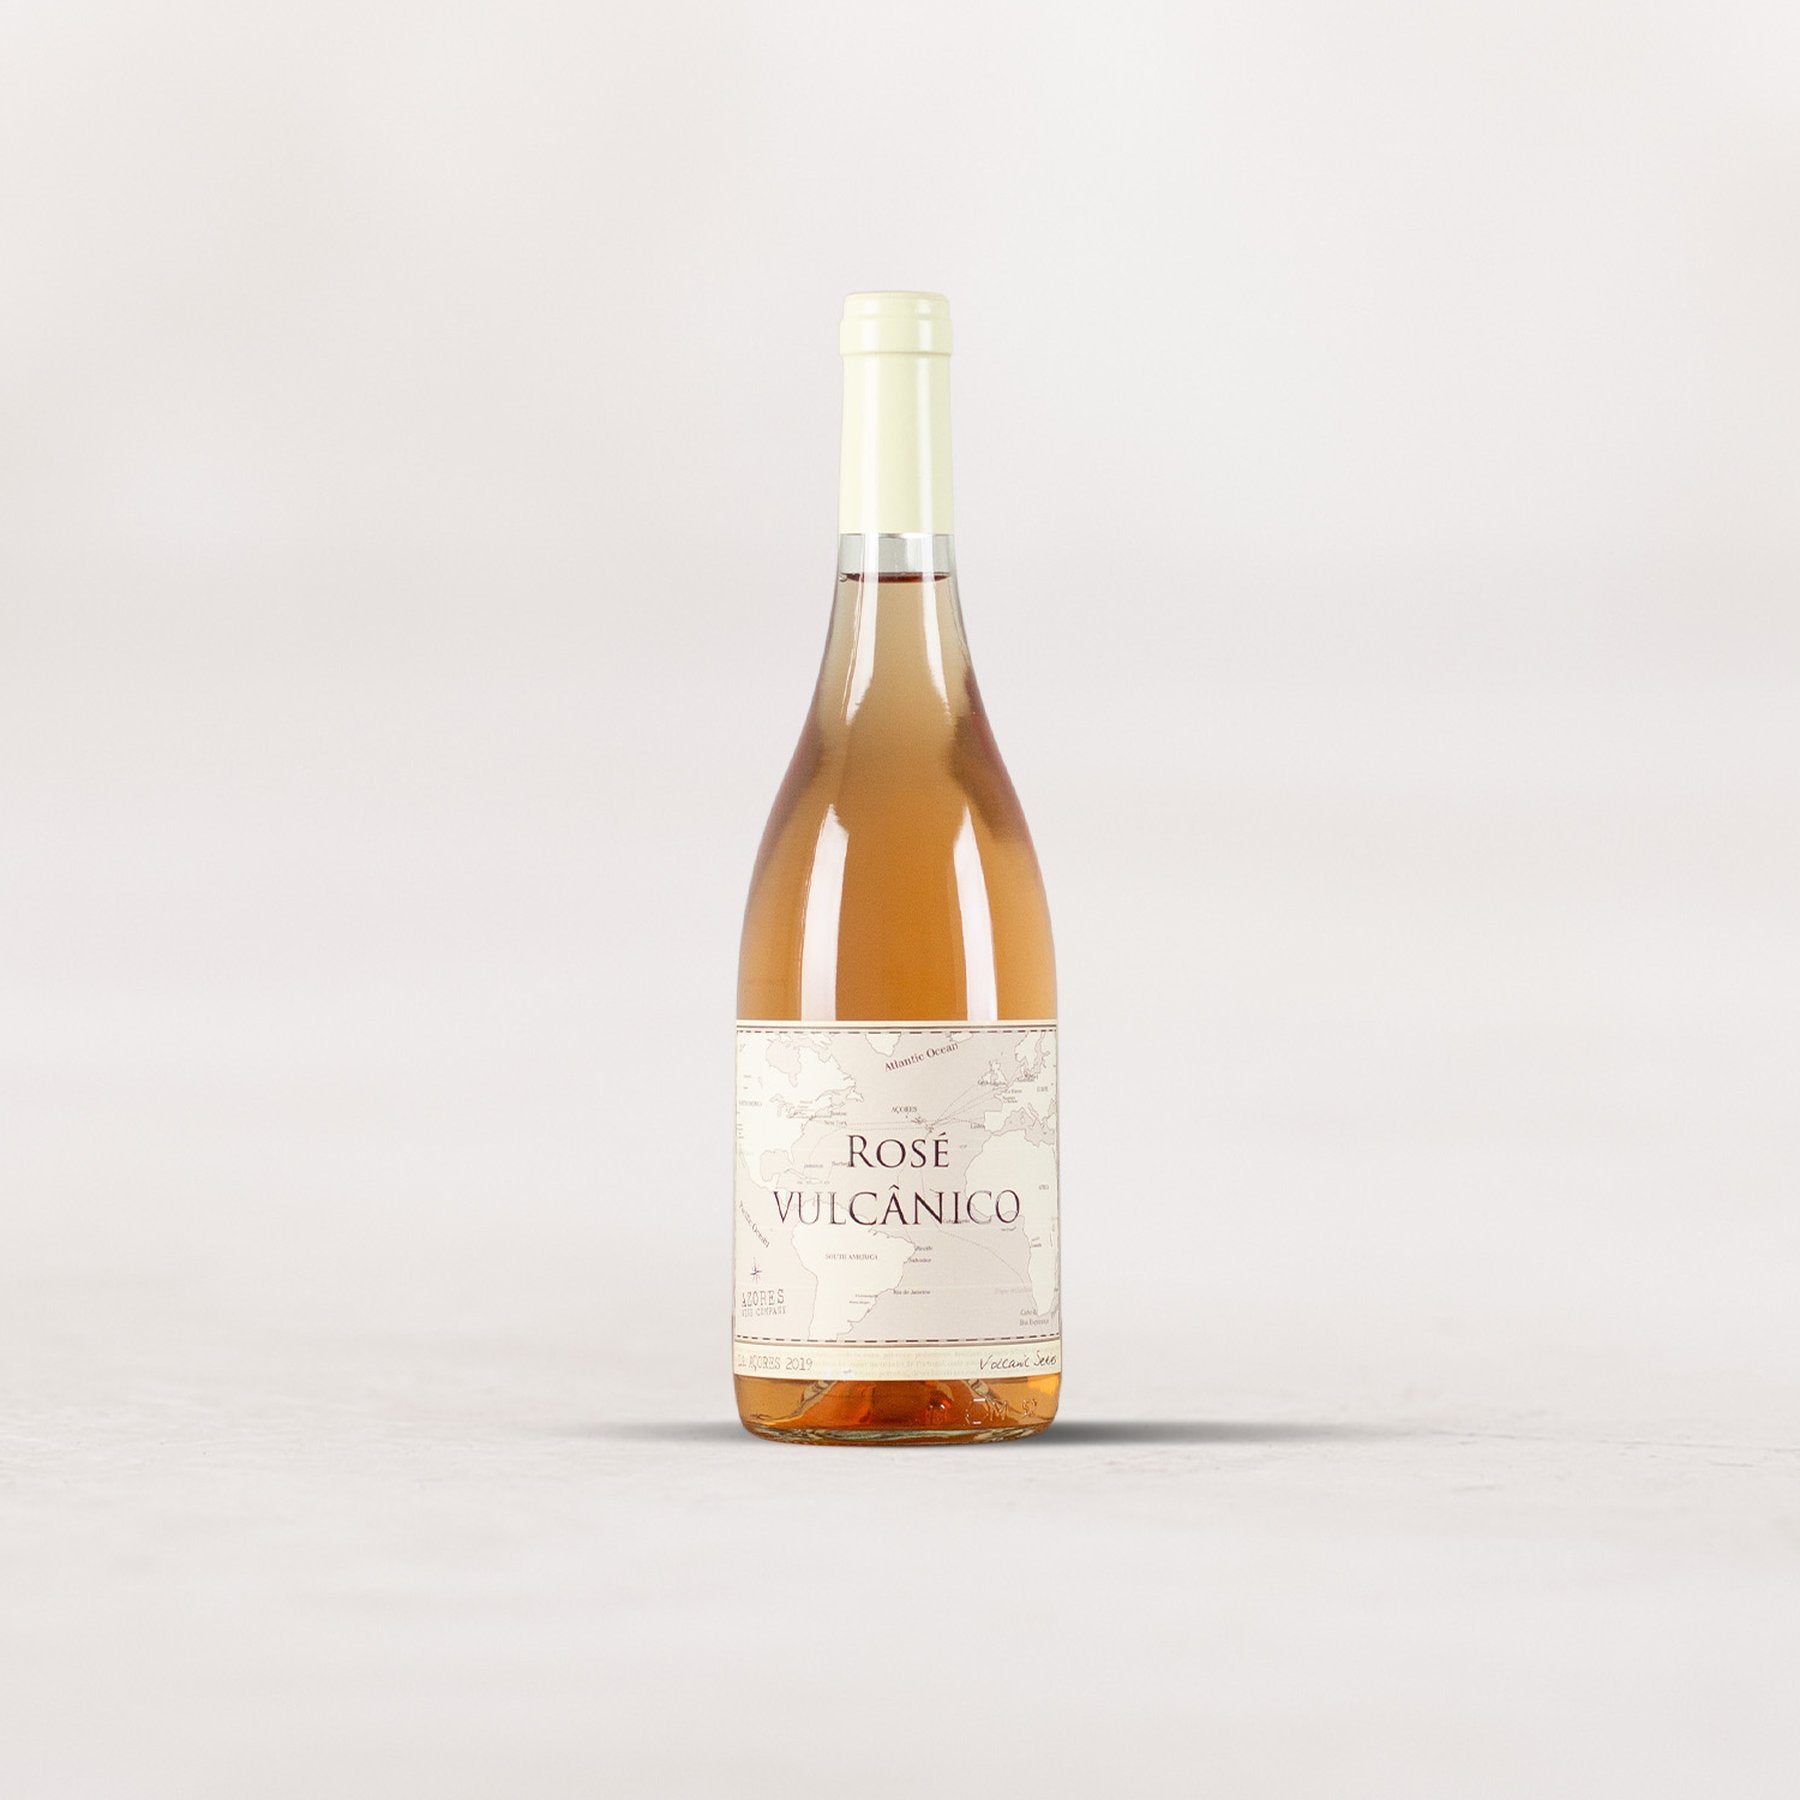 Azores Wine Co., “Rosé Vulcanico”